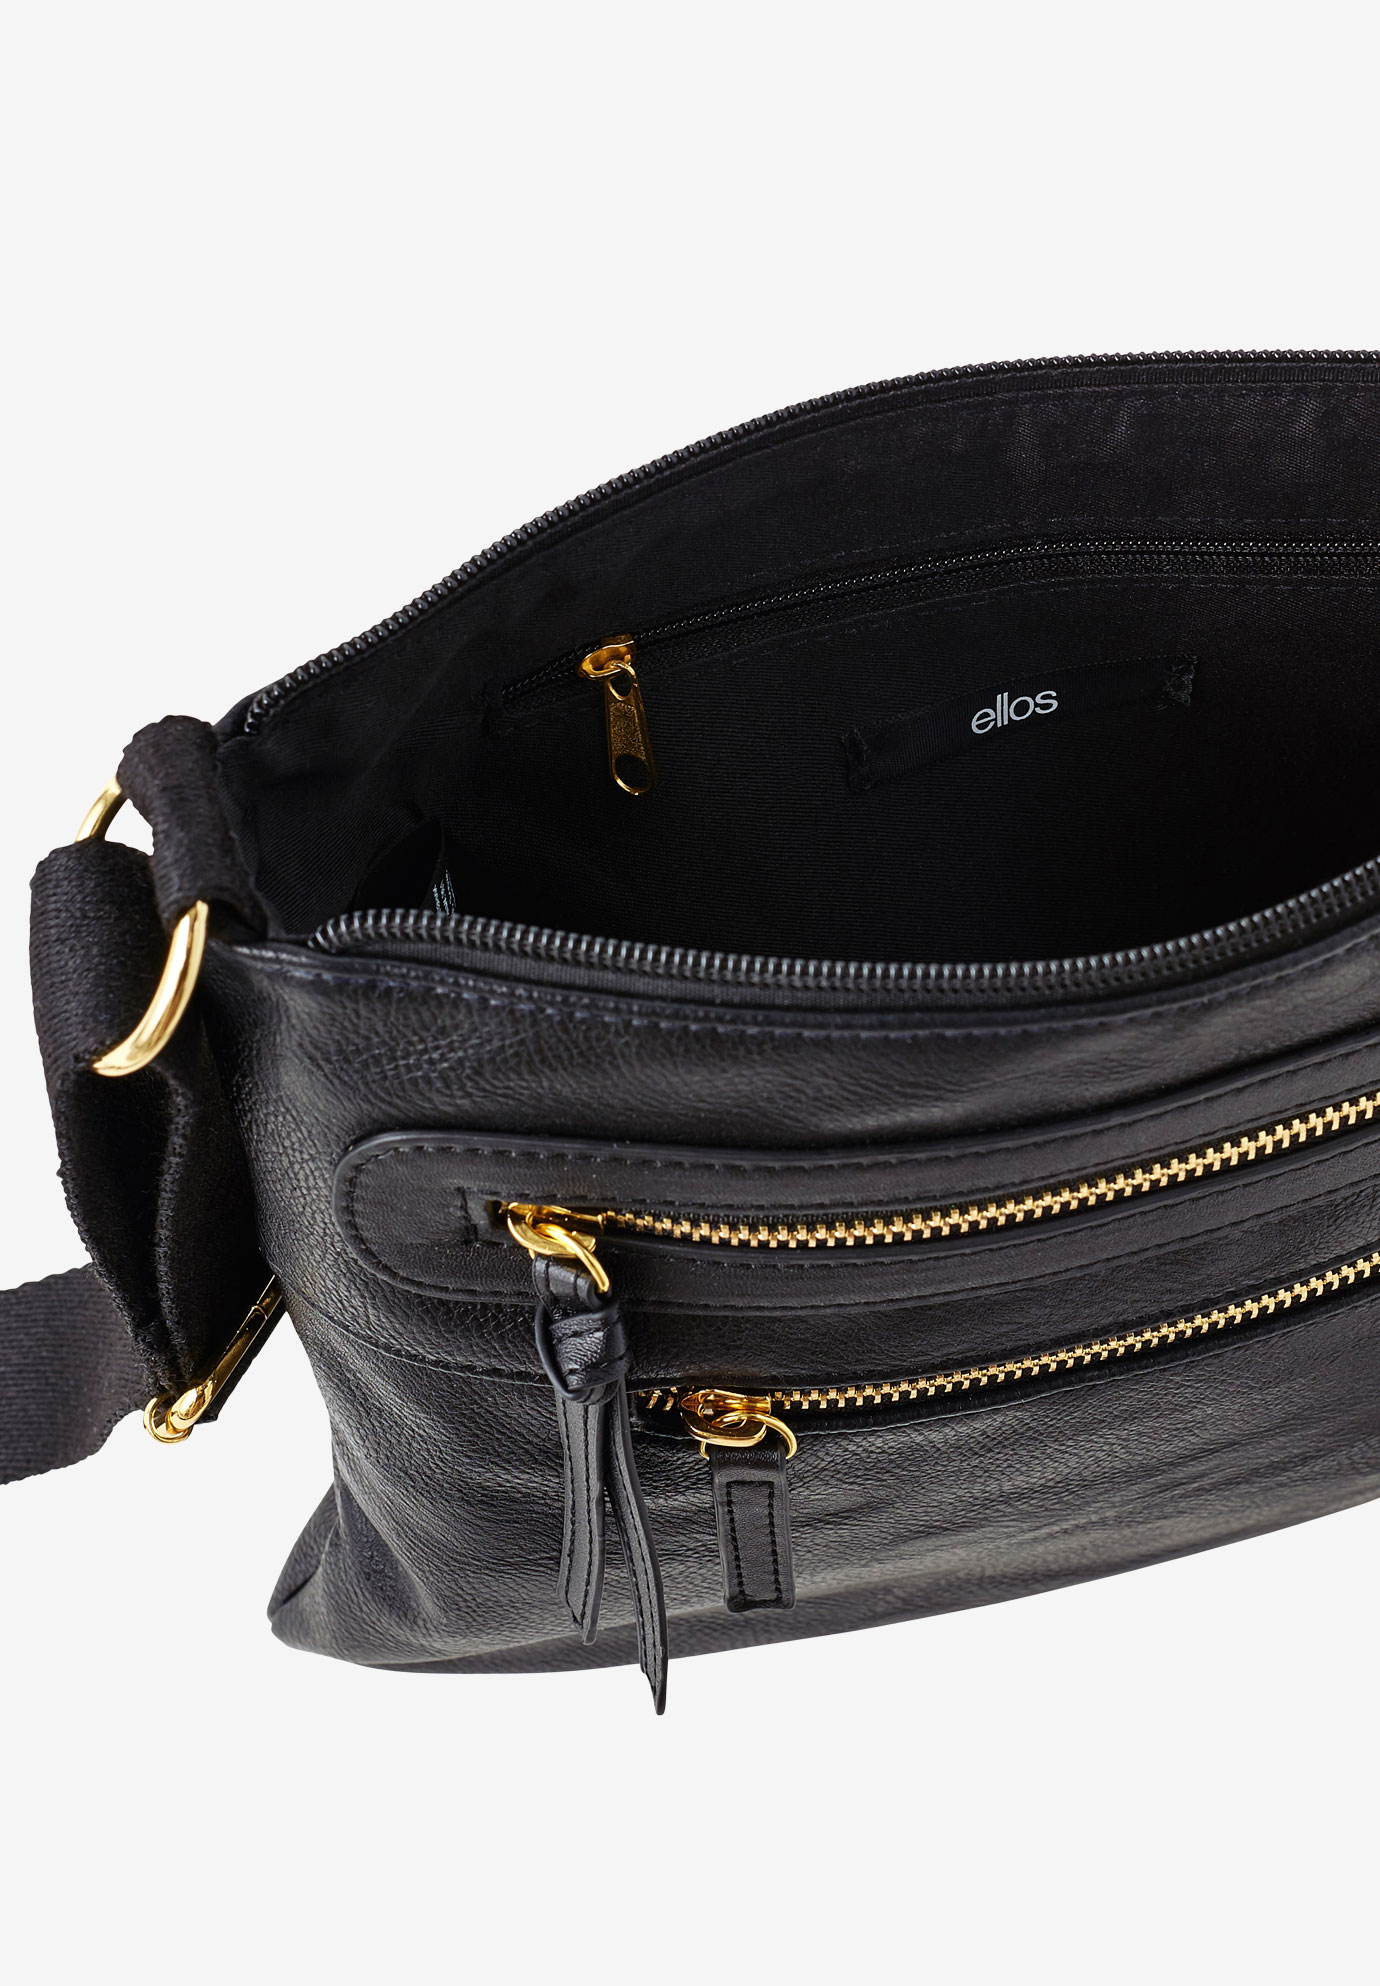 Ellos Women's Multi-Zip Crossbody Bag - image 3 of 3